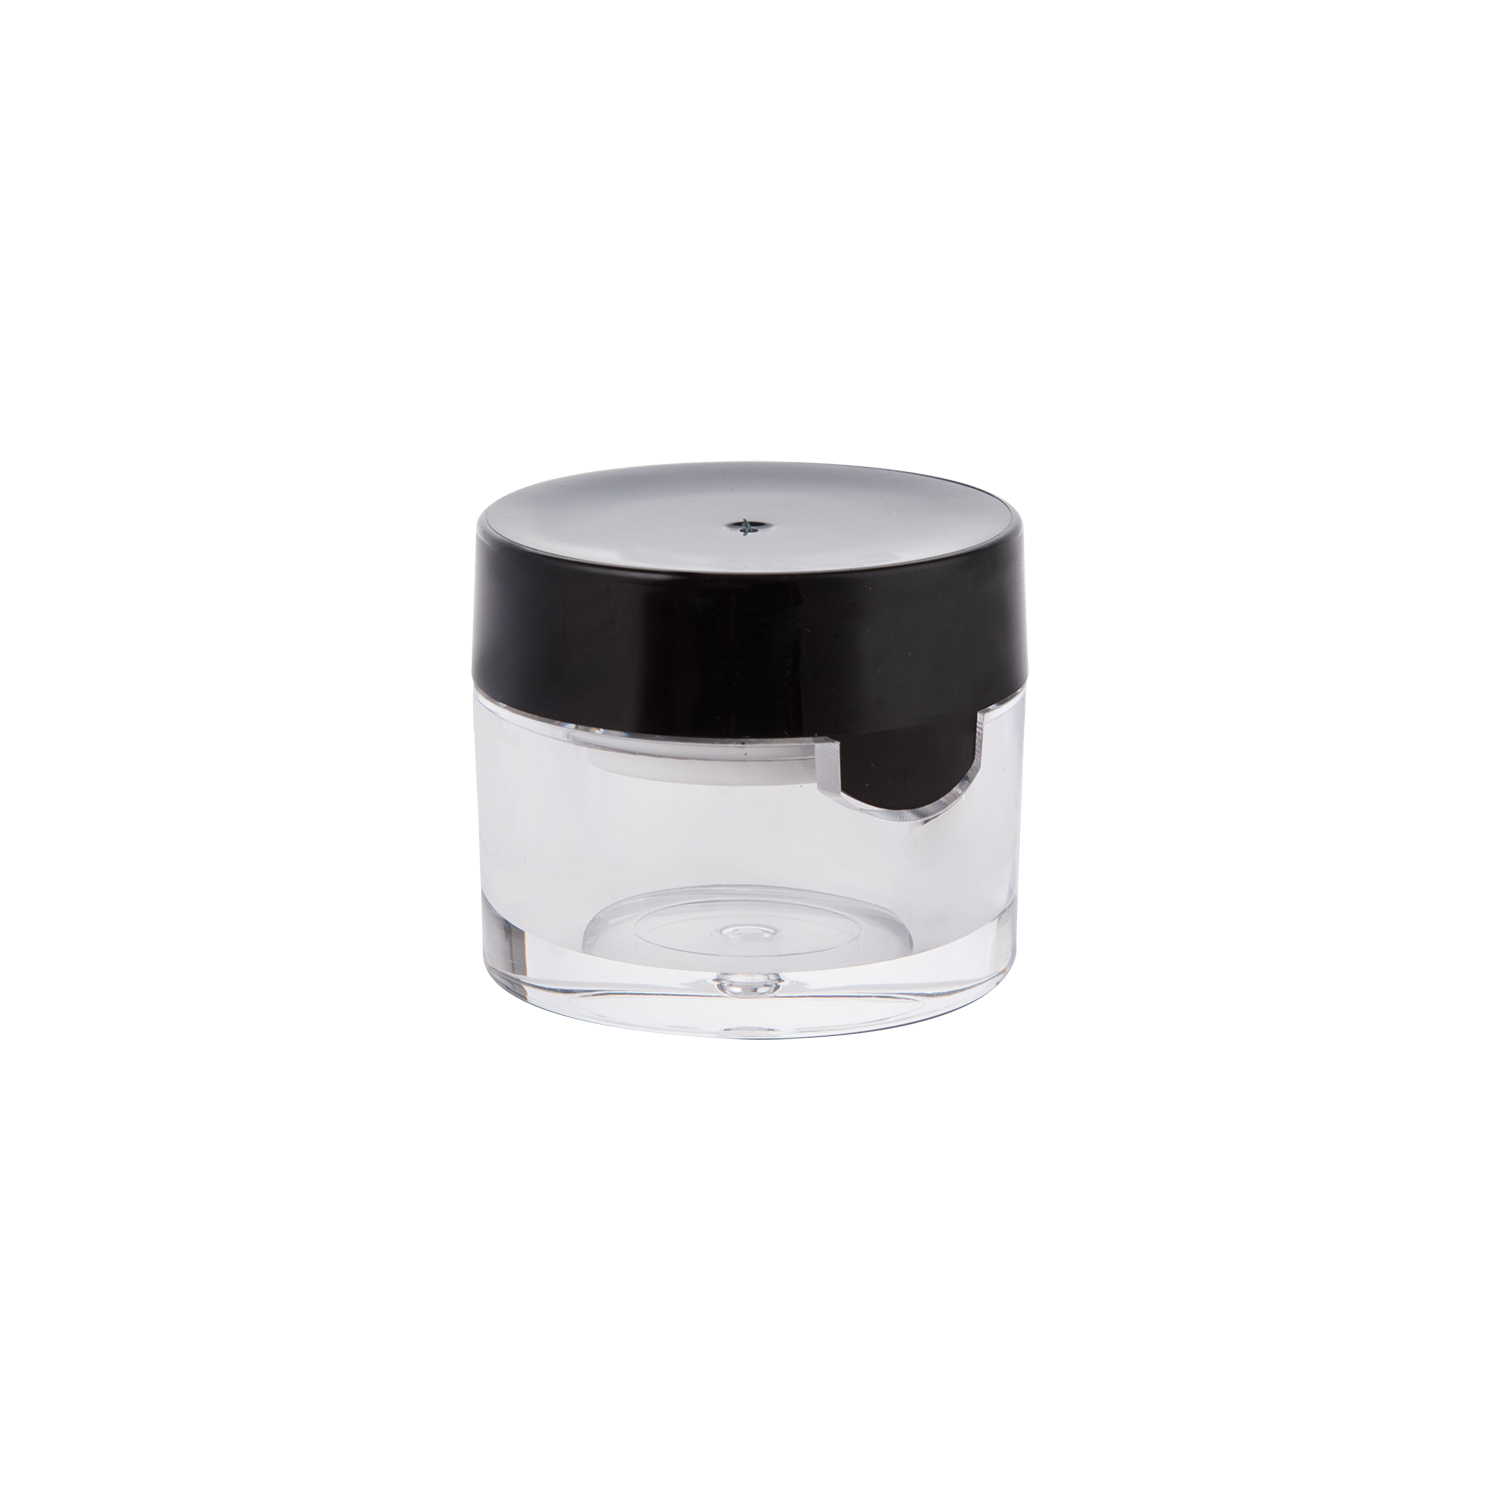 5g Round PMMA Nail Polish Jar Custom Nail Care Packaging